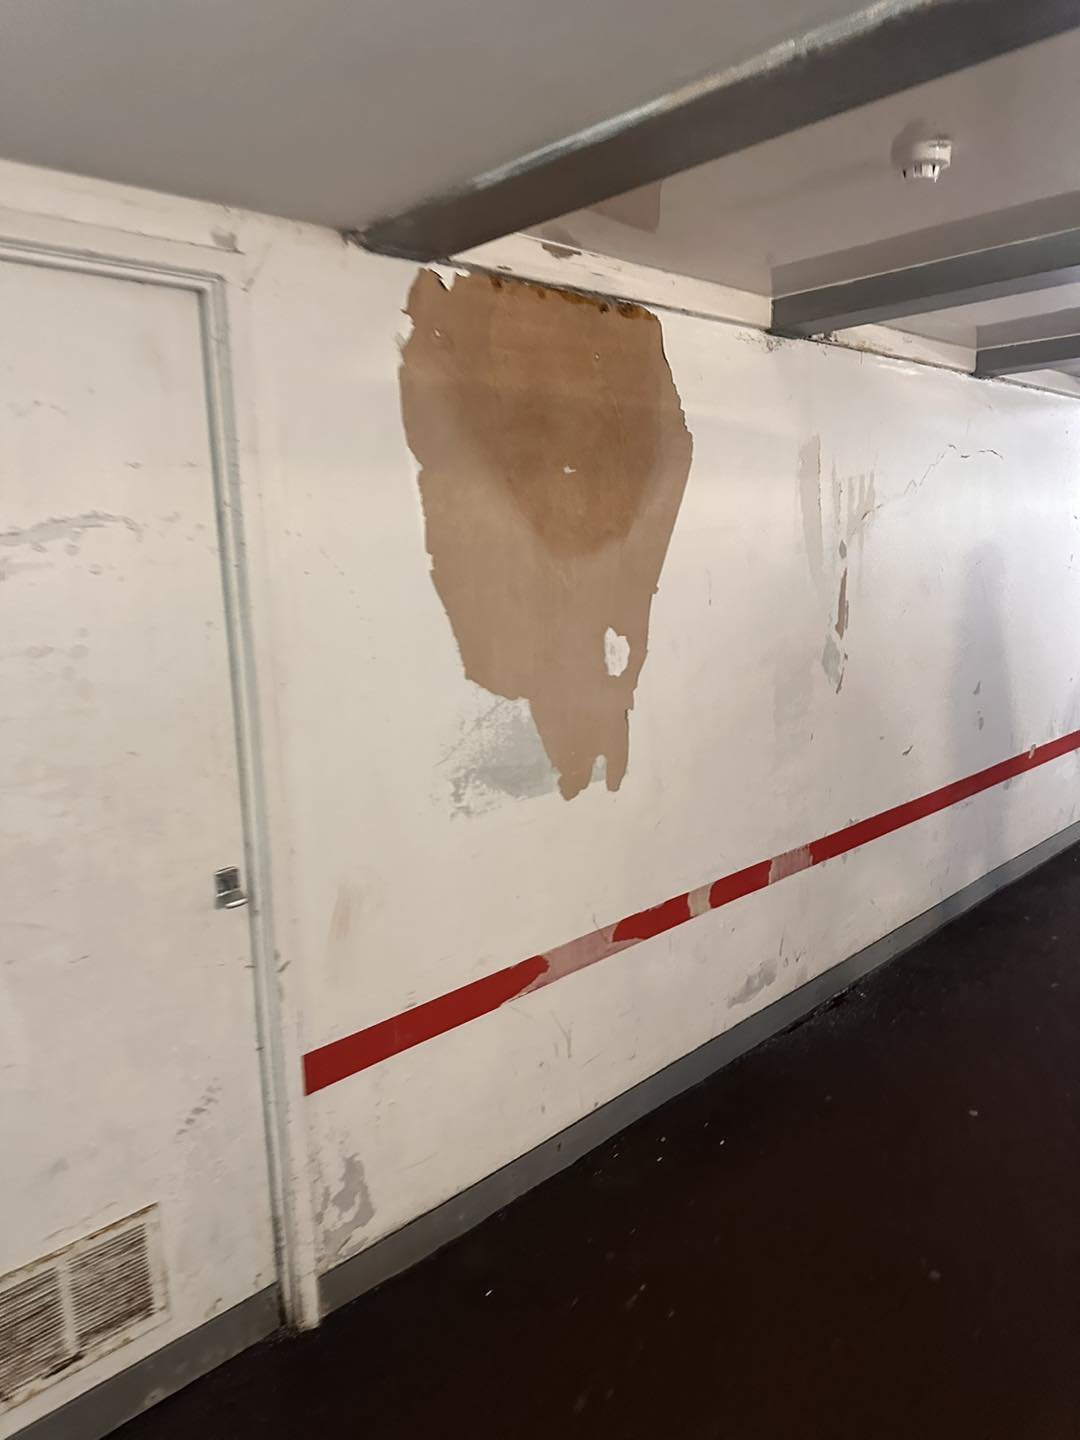    Damaged, peeling walls at Stockport station.   